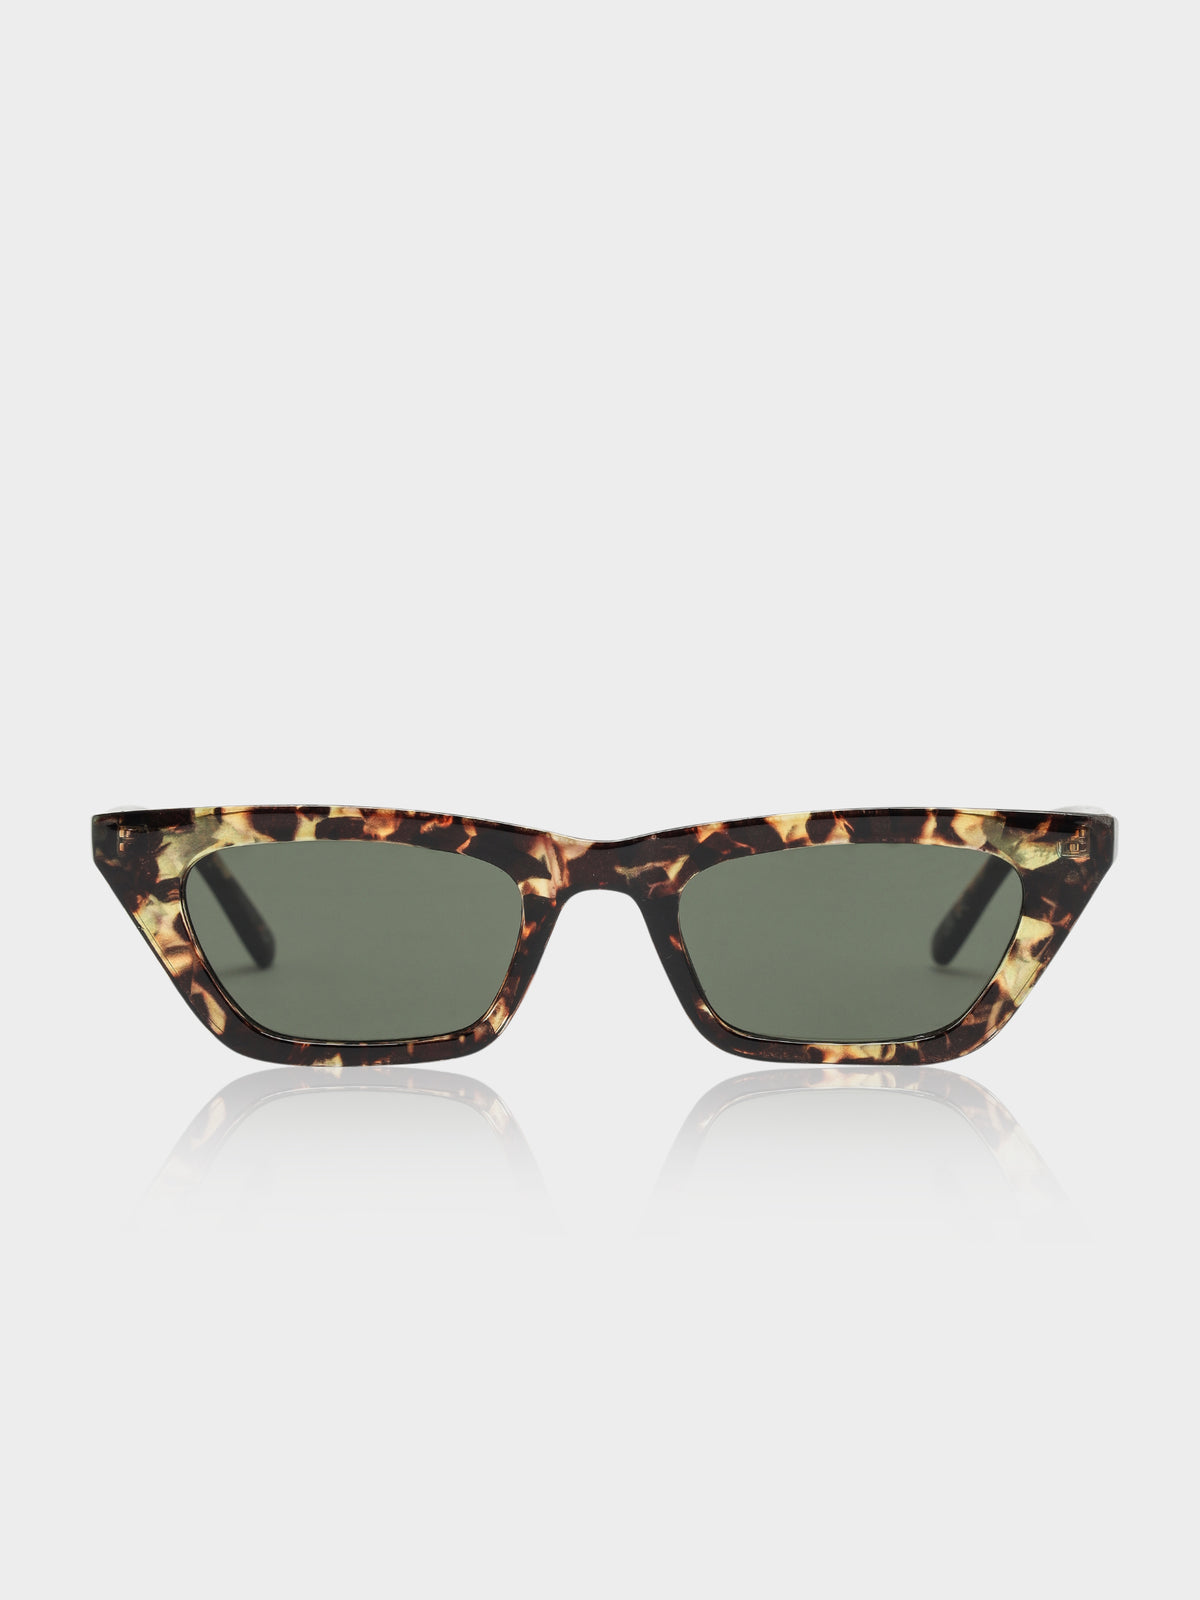 Arena Sunglasses in Jaded Green